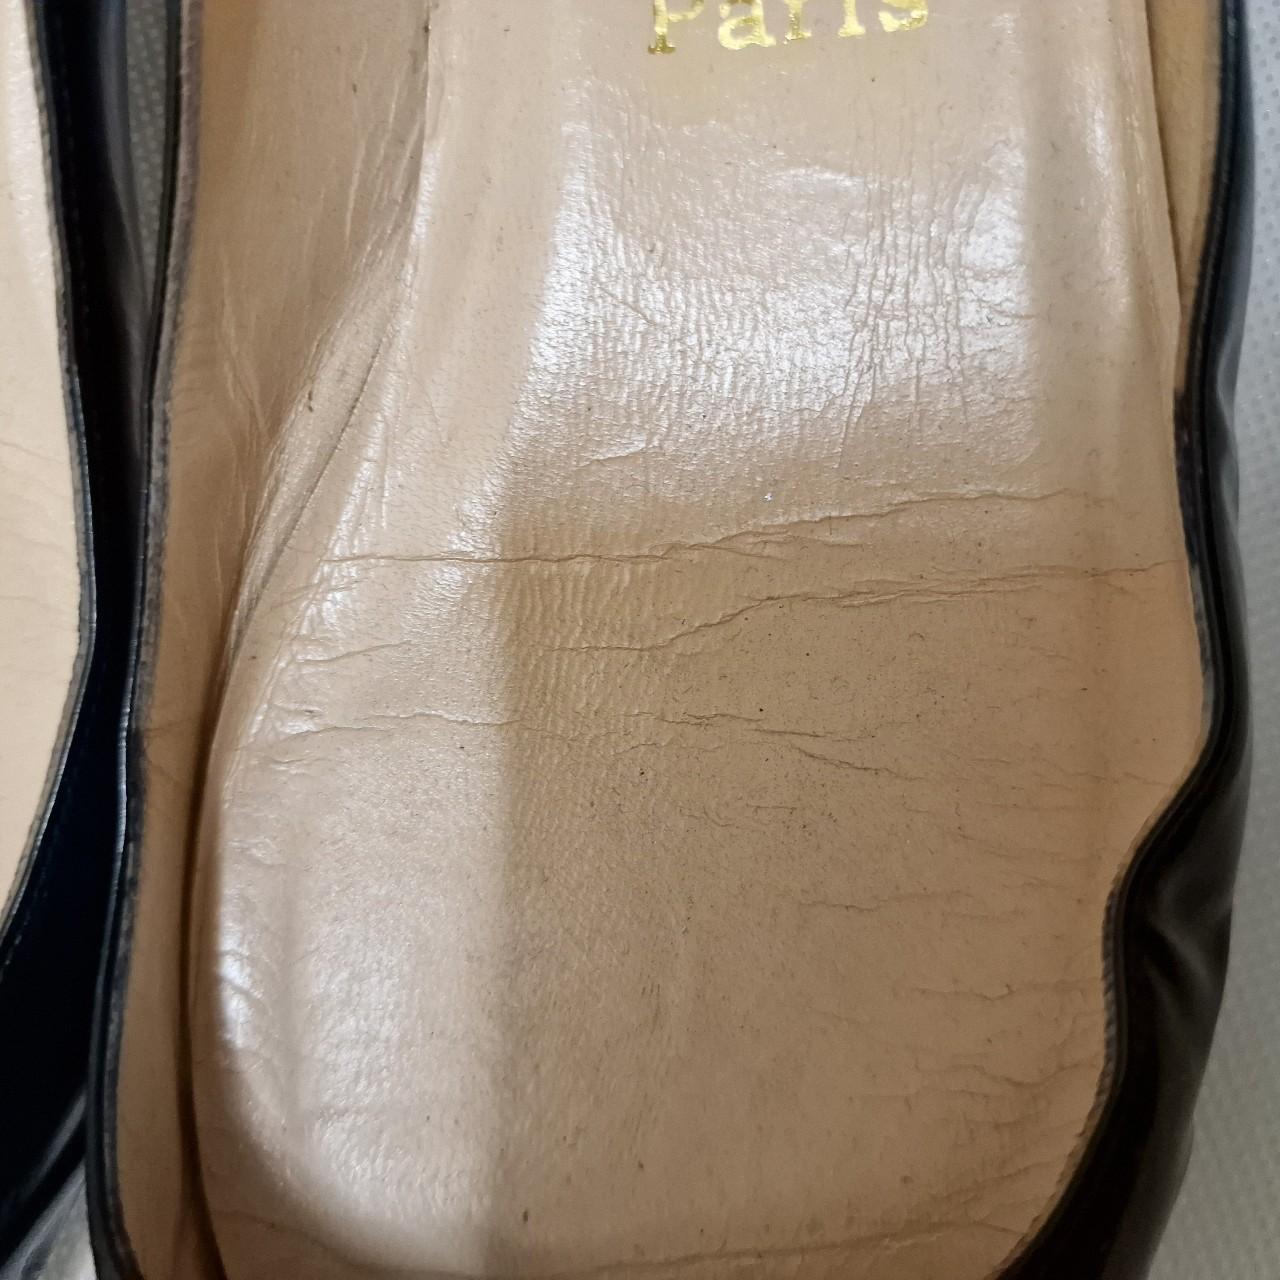 CHRISTIAN LOUBOUTIN Black Patent Leather Peep Toe... - Depop